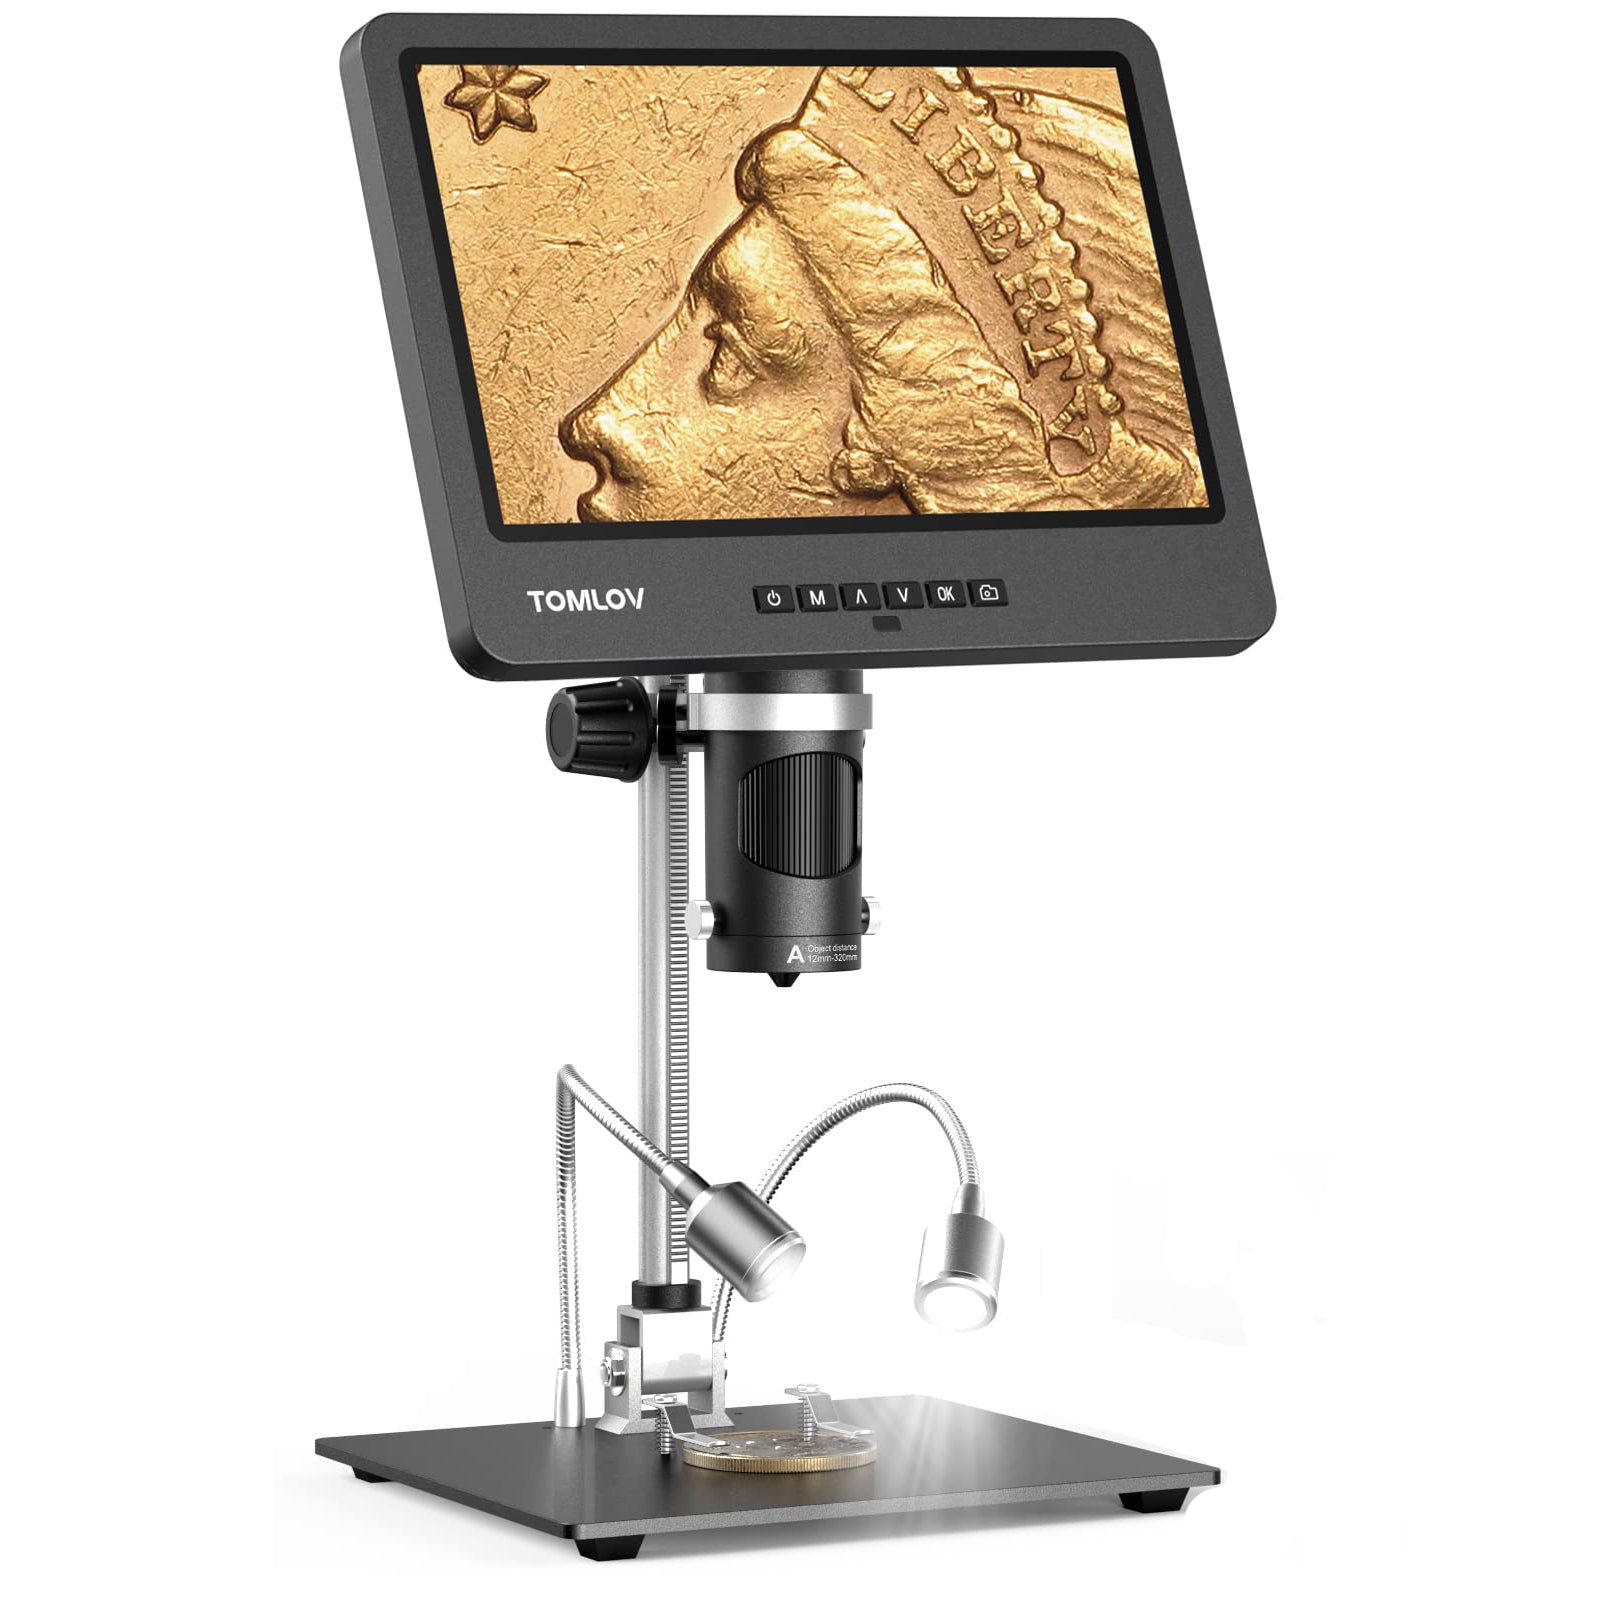 TOMLOV DM602 HDMI LCD Microscope,10.1 inch IPS Screen,Soldering Coin Microscope